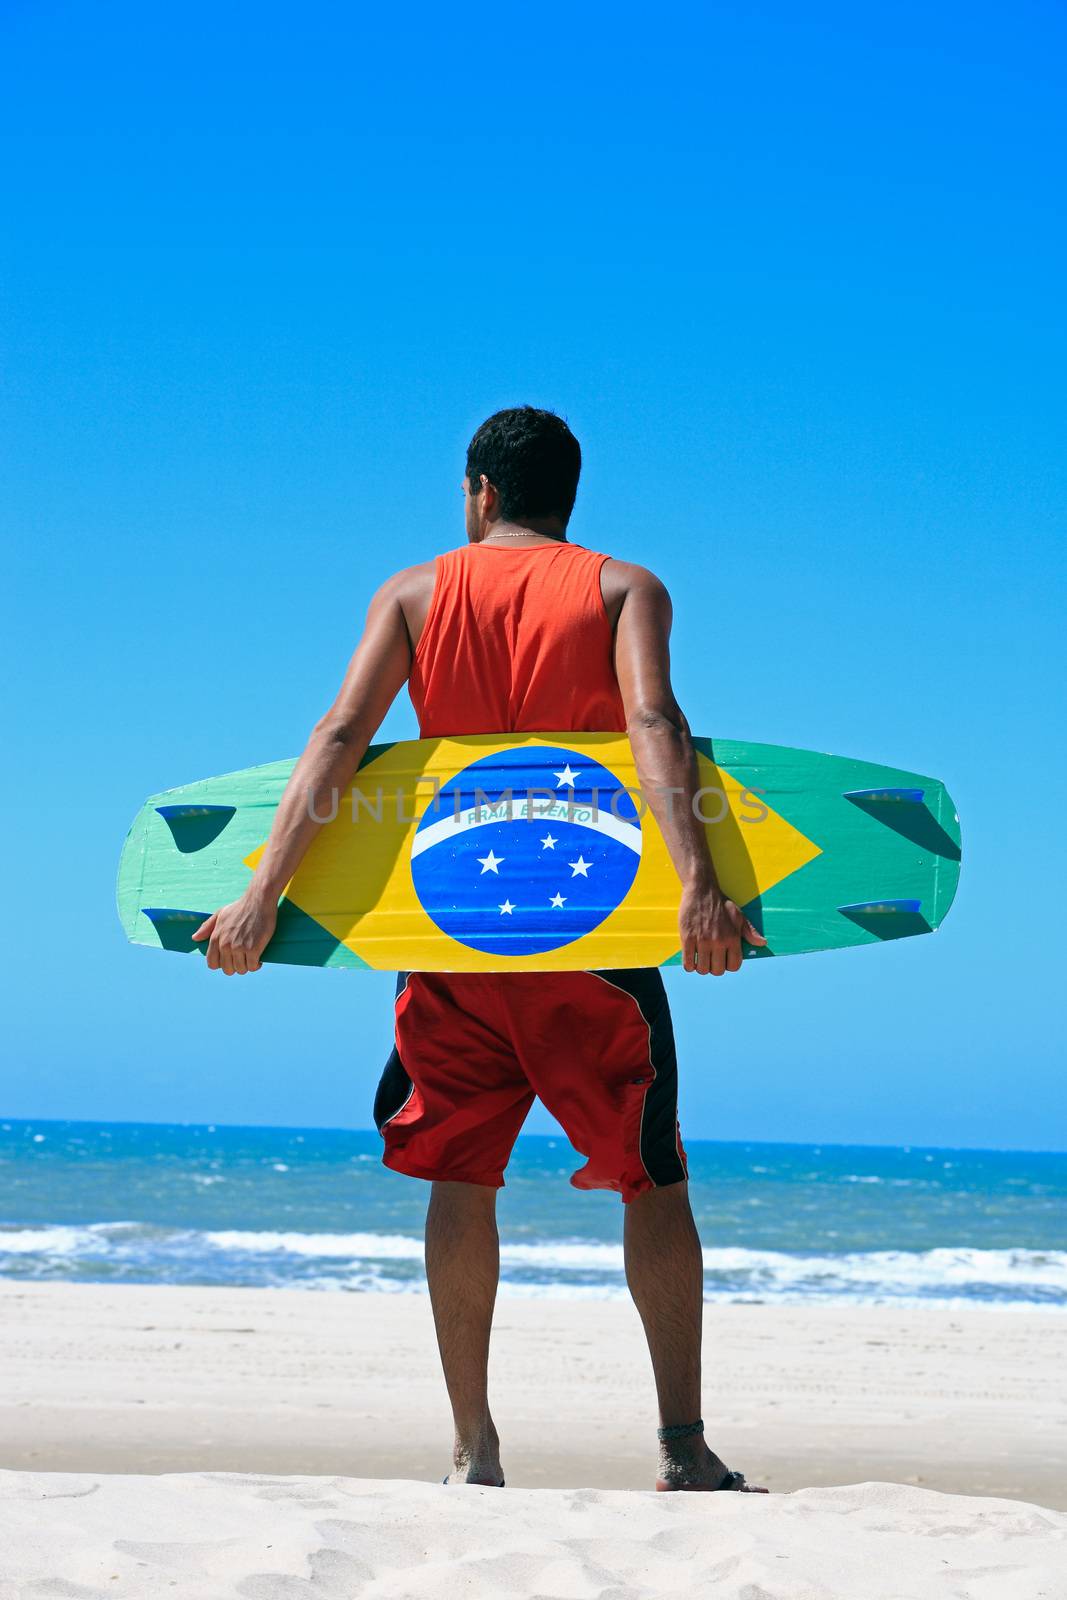 Kite surfing in brazil by PIXSTILL